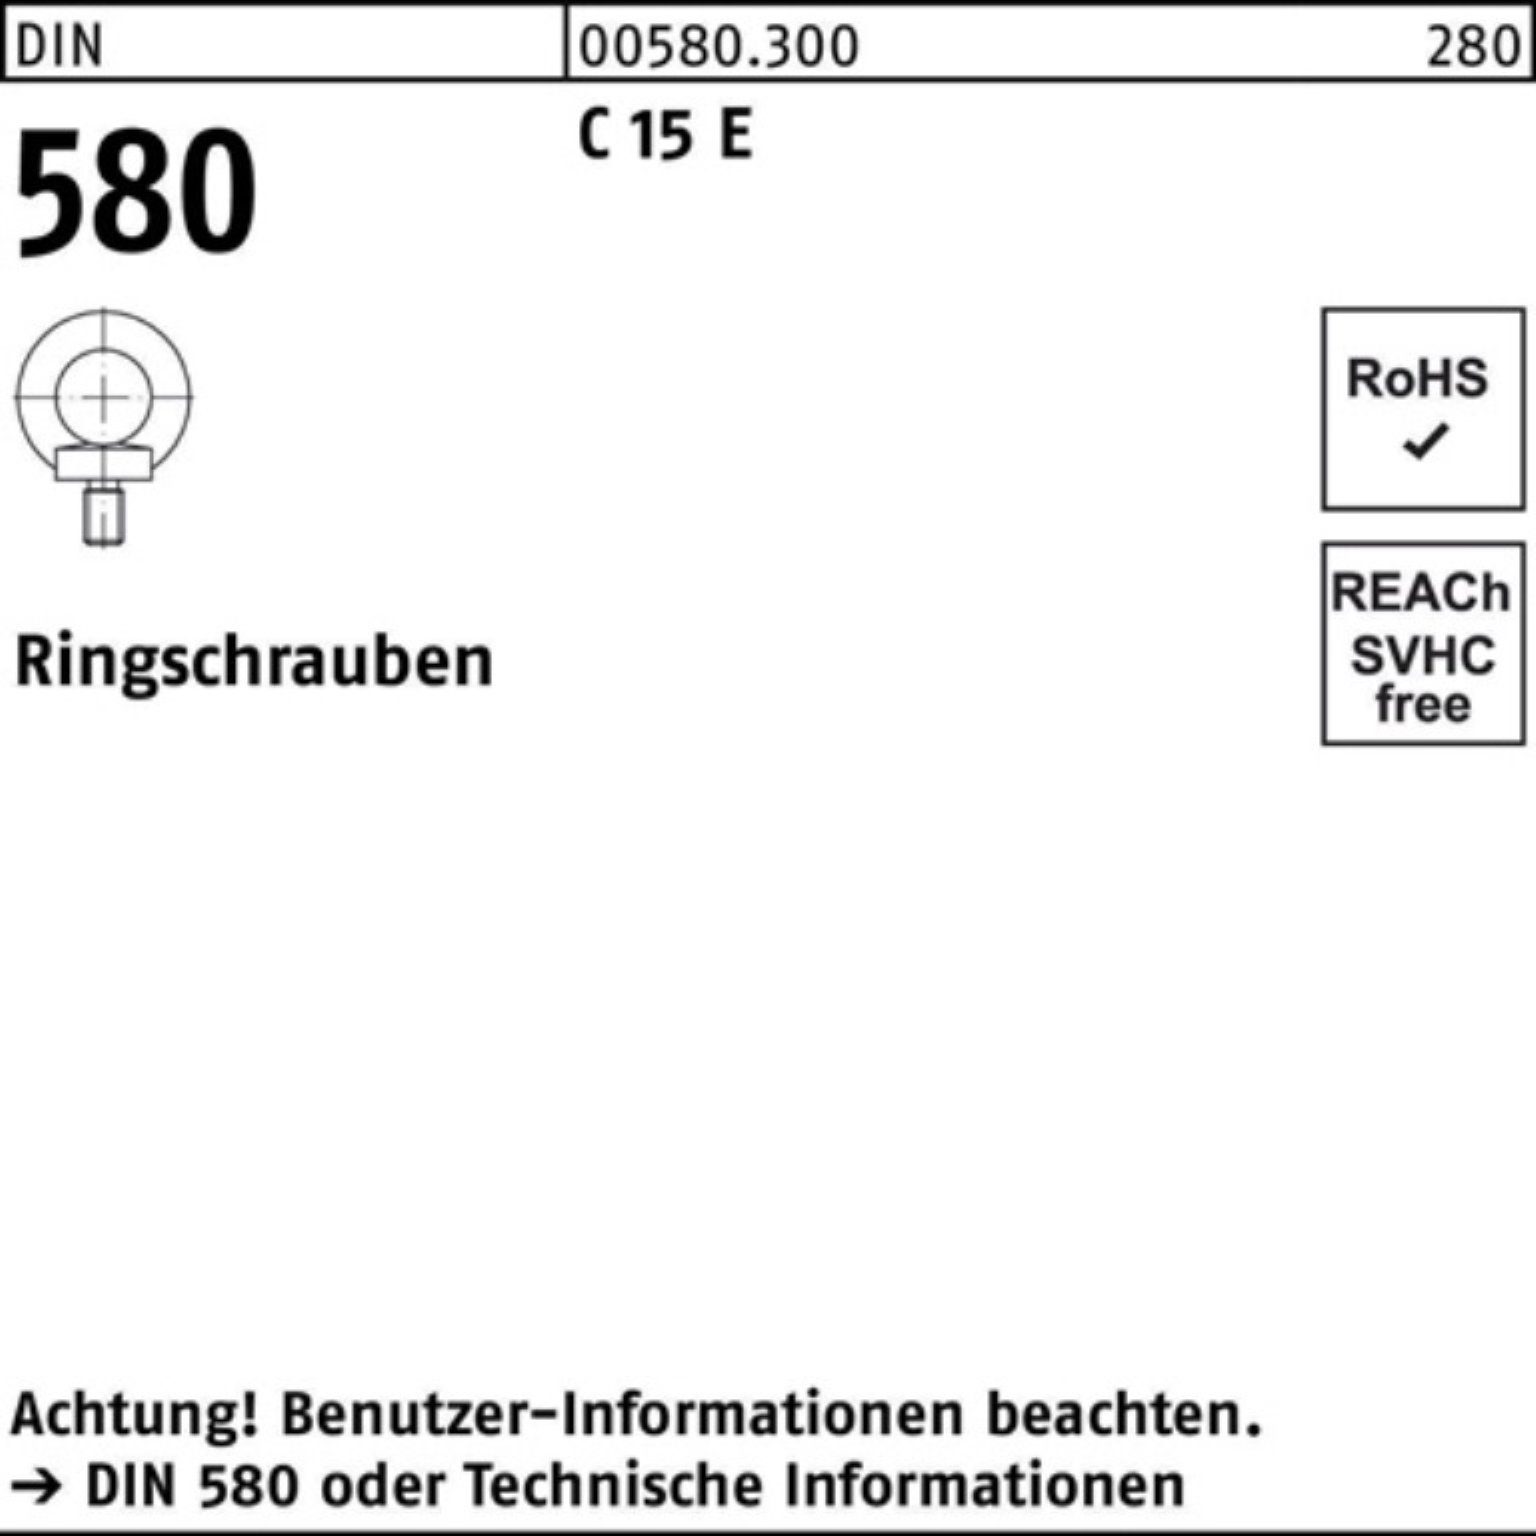 Reyher Schraube 100er Pack Ringschraube DIN DIN 580 15 Stück 580 15 C E Rin C M6 E 25